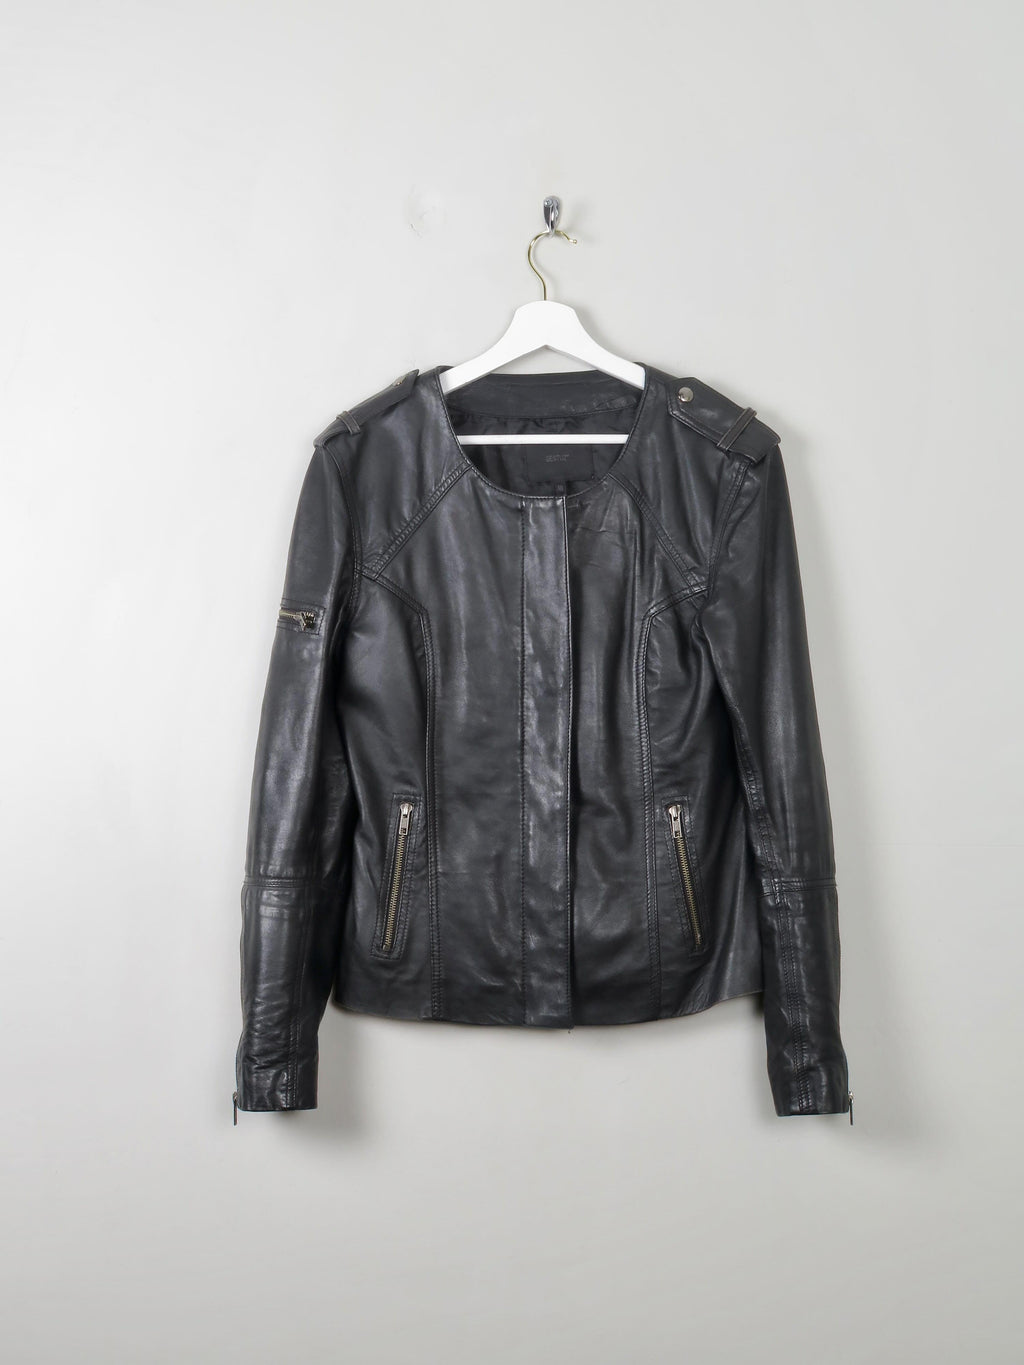 Women's Gestuz Black Leather Jacket 10/40 - The Harlequin